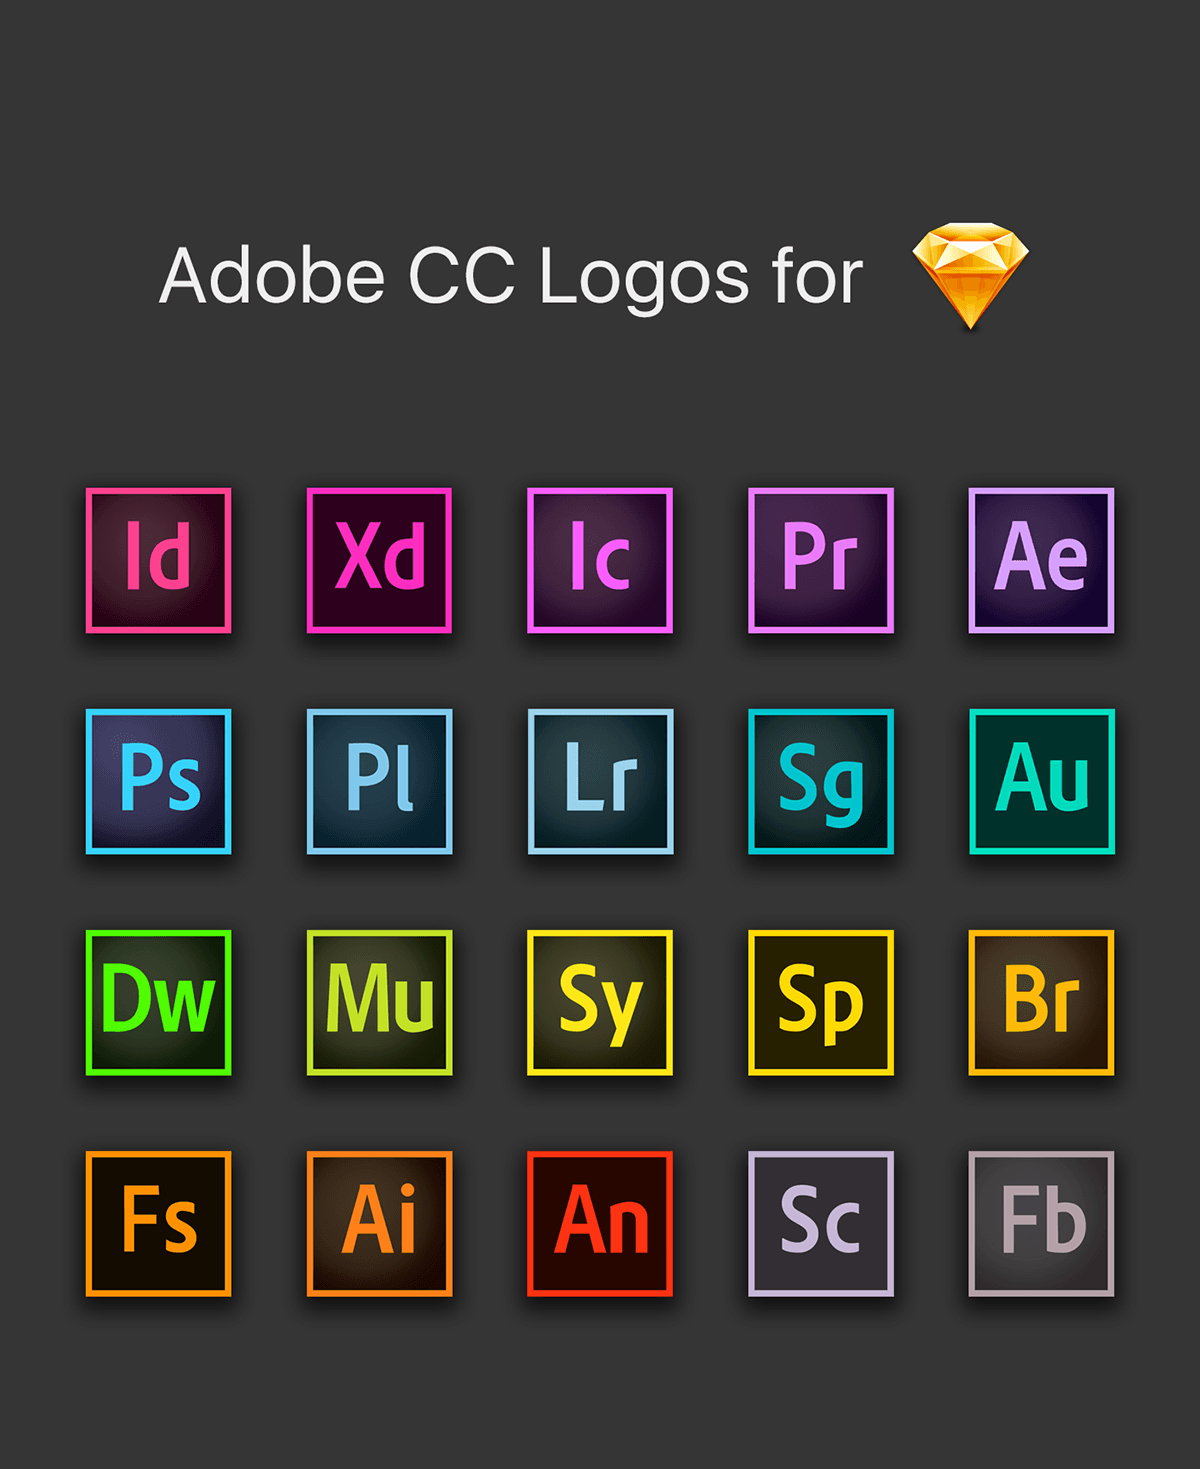 Adobe CC Logo - Adobe CC Logos for Sketch